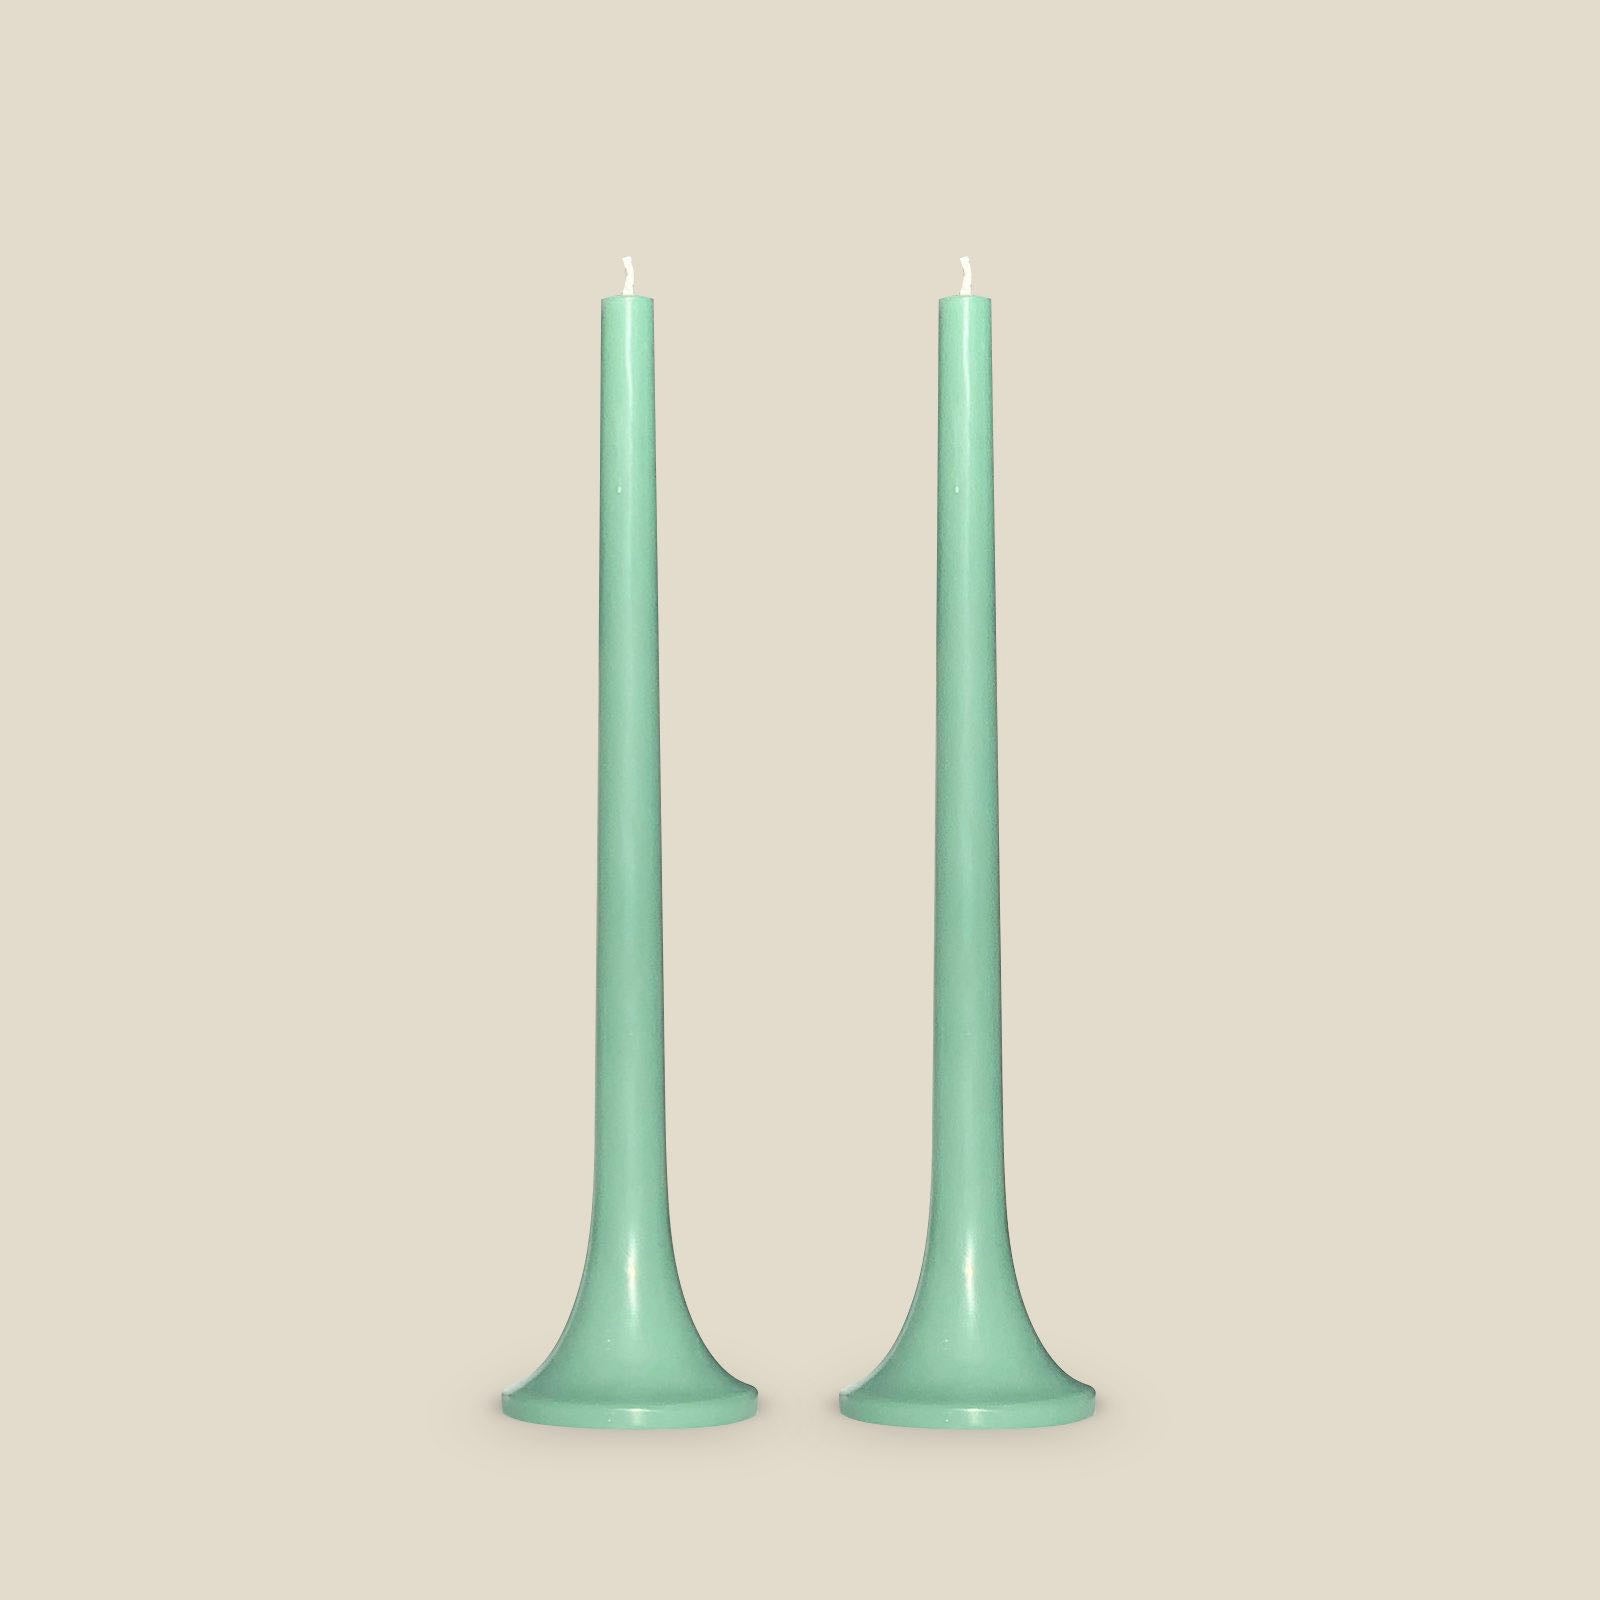 Stylish jade green candlestick